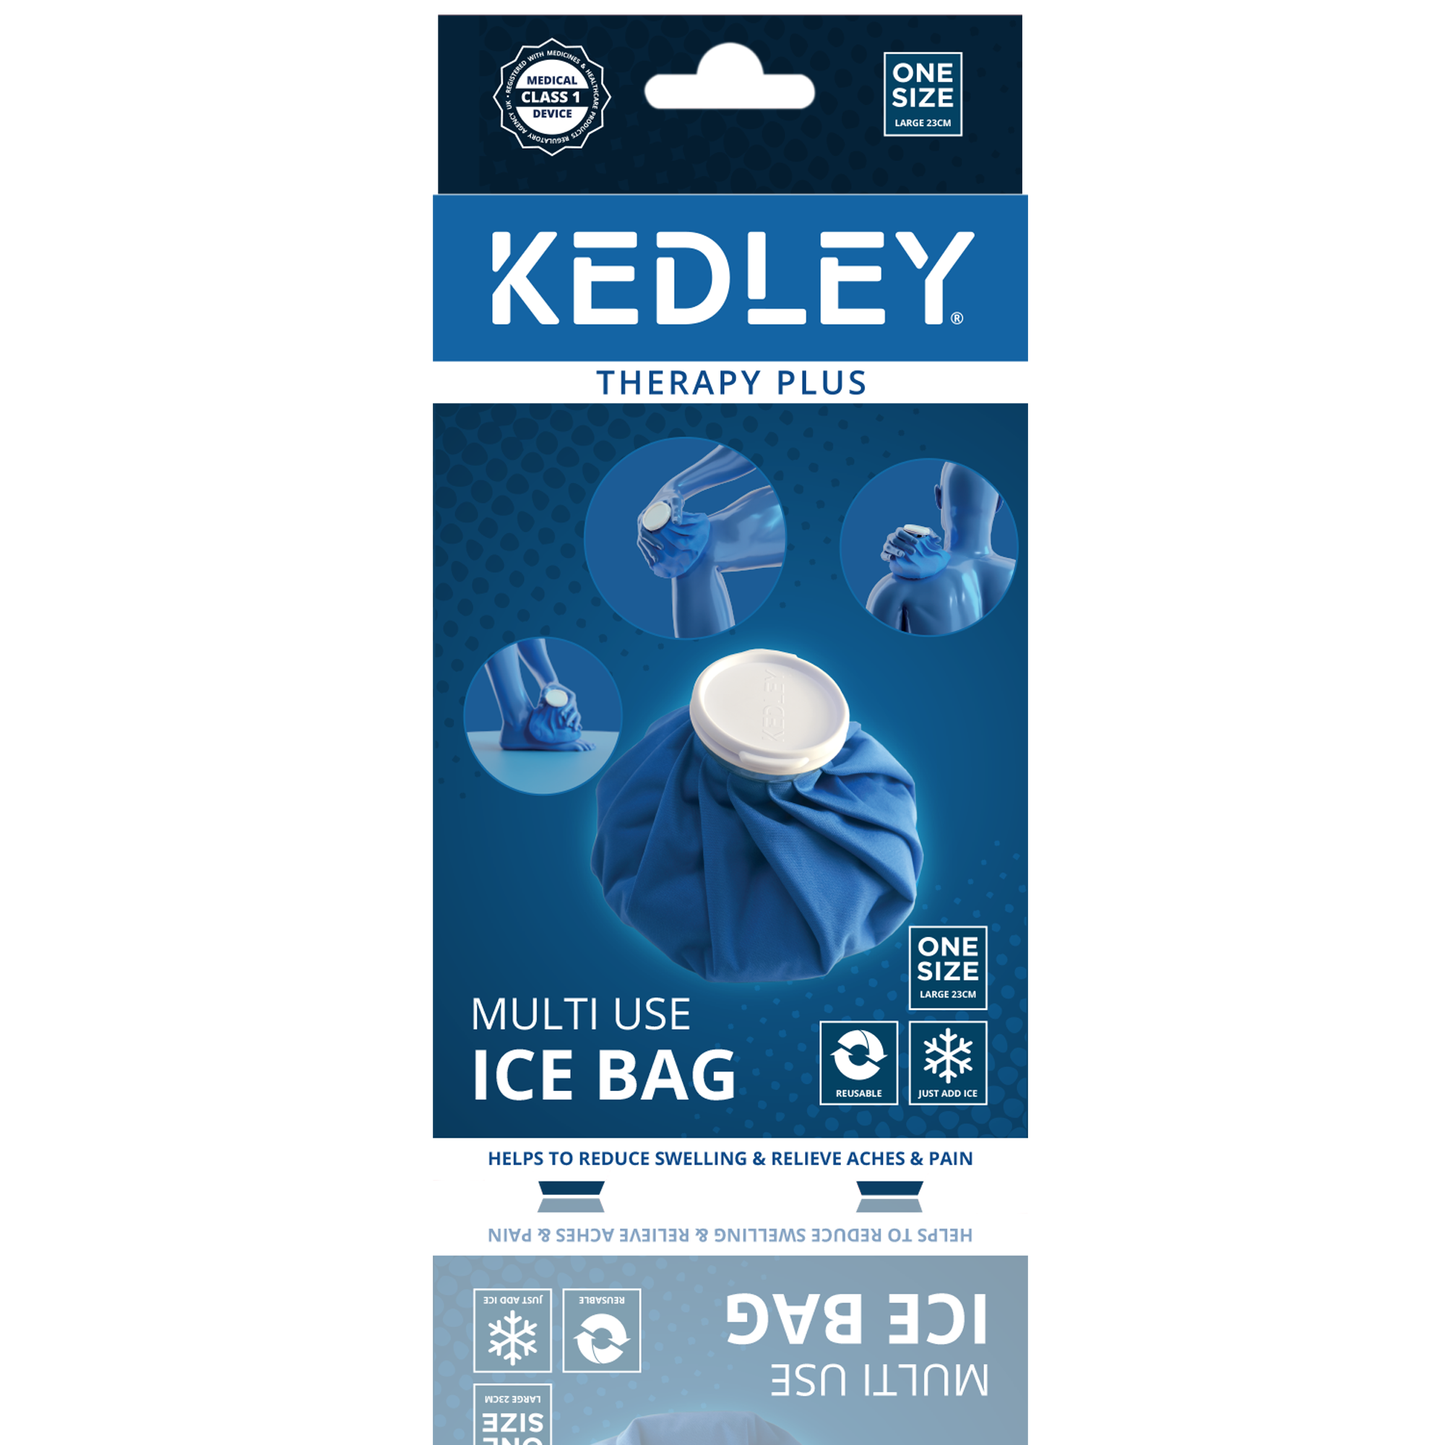 Multiuse Ice Bag (£9.99)